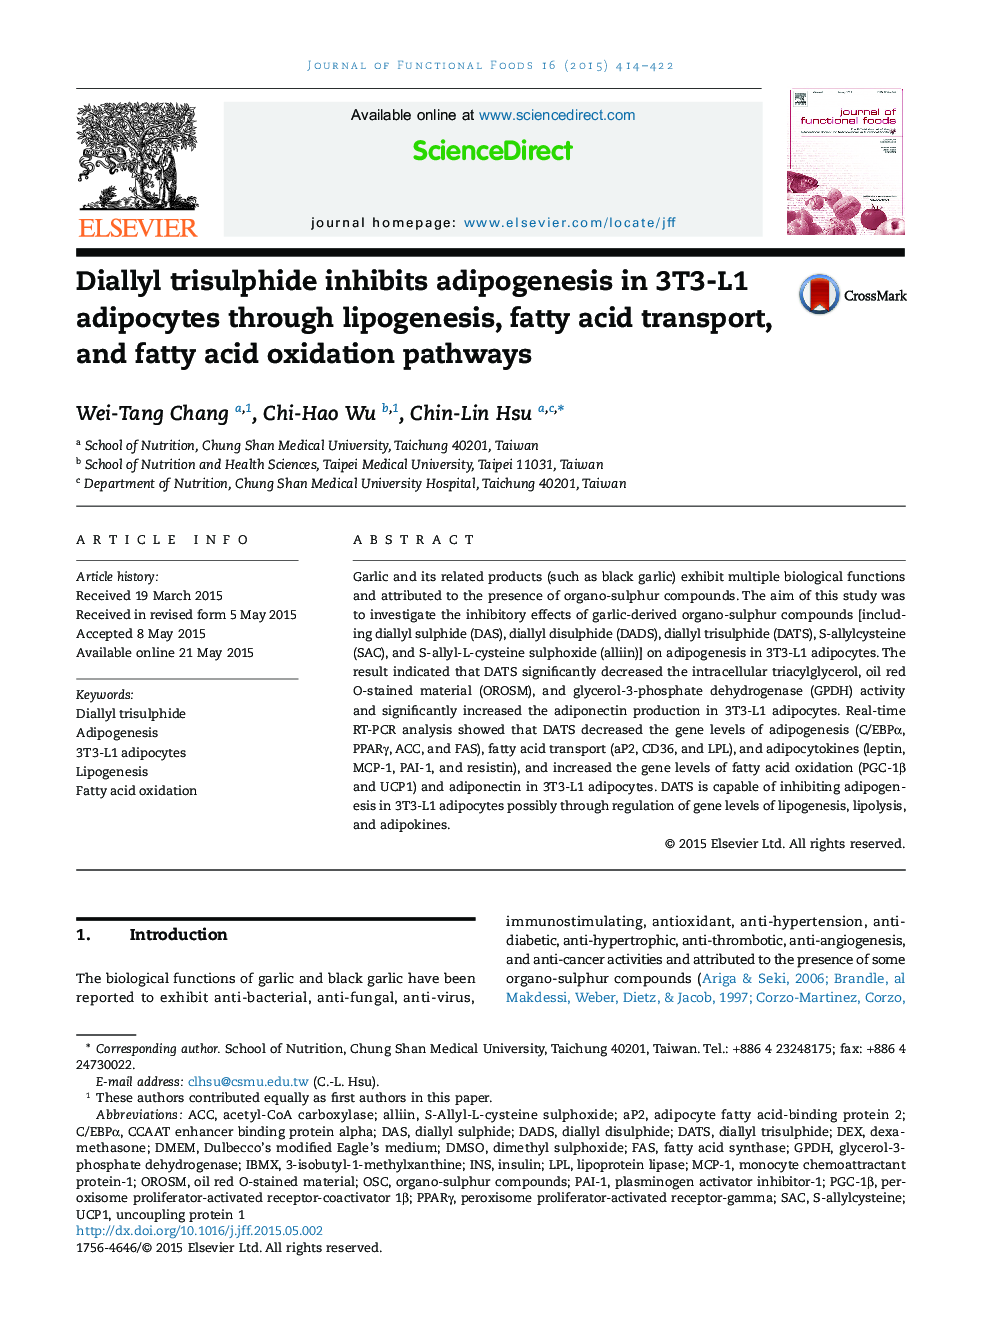 Diallyl trisulphide inhibits adipogenesis in 3T3-L1 adipocytes through lipogenesis, fatty acid transport, and fatty acid oxidation pathways